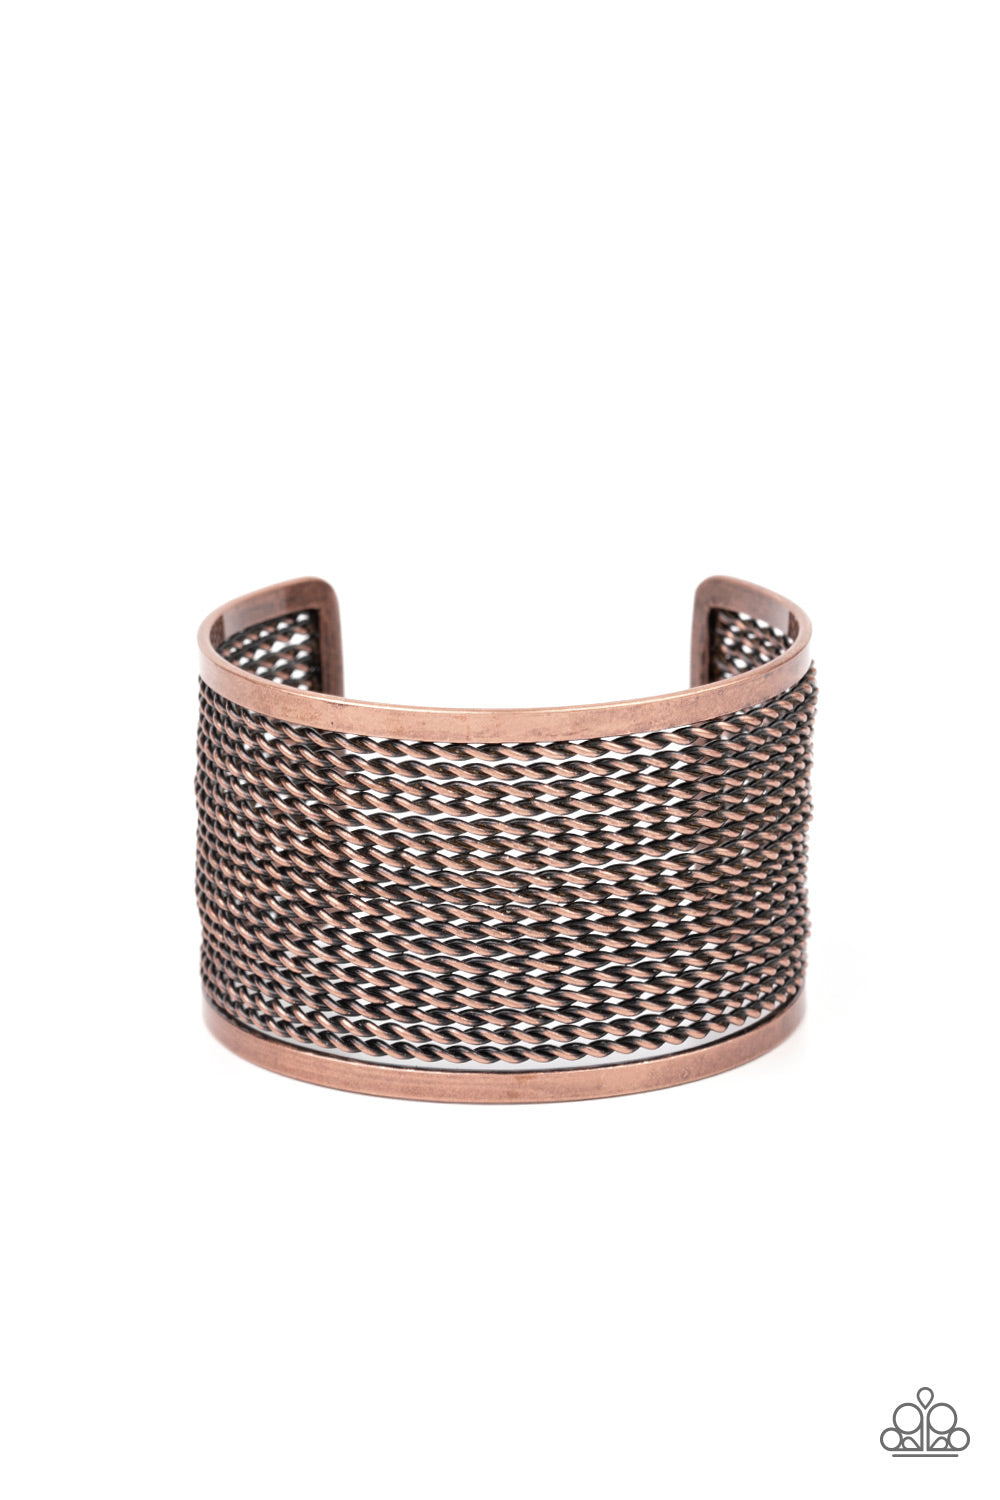 Stacked Sensation - Copper Cuff Bracelet - Princess Glam Shop